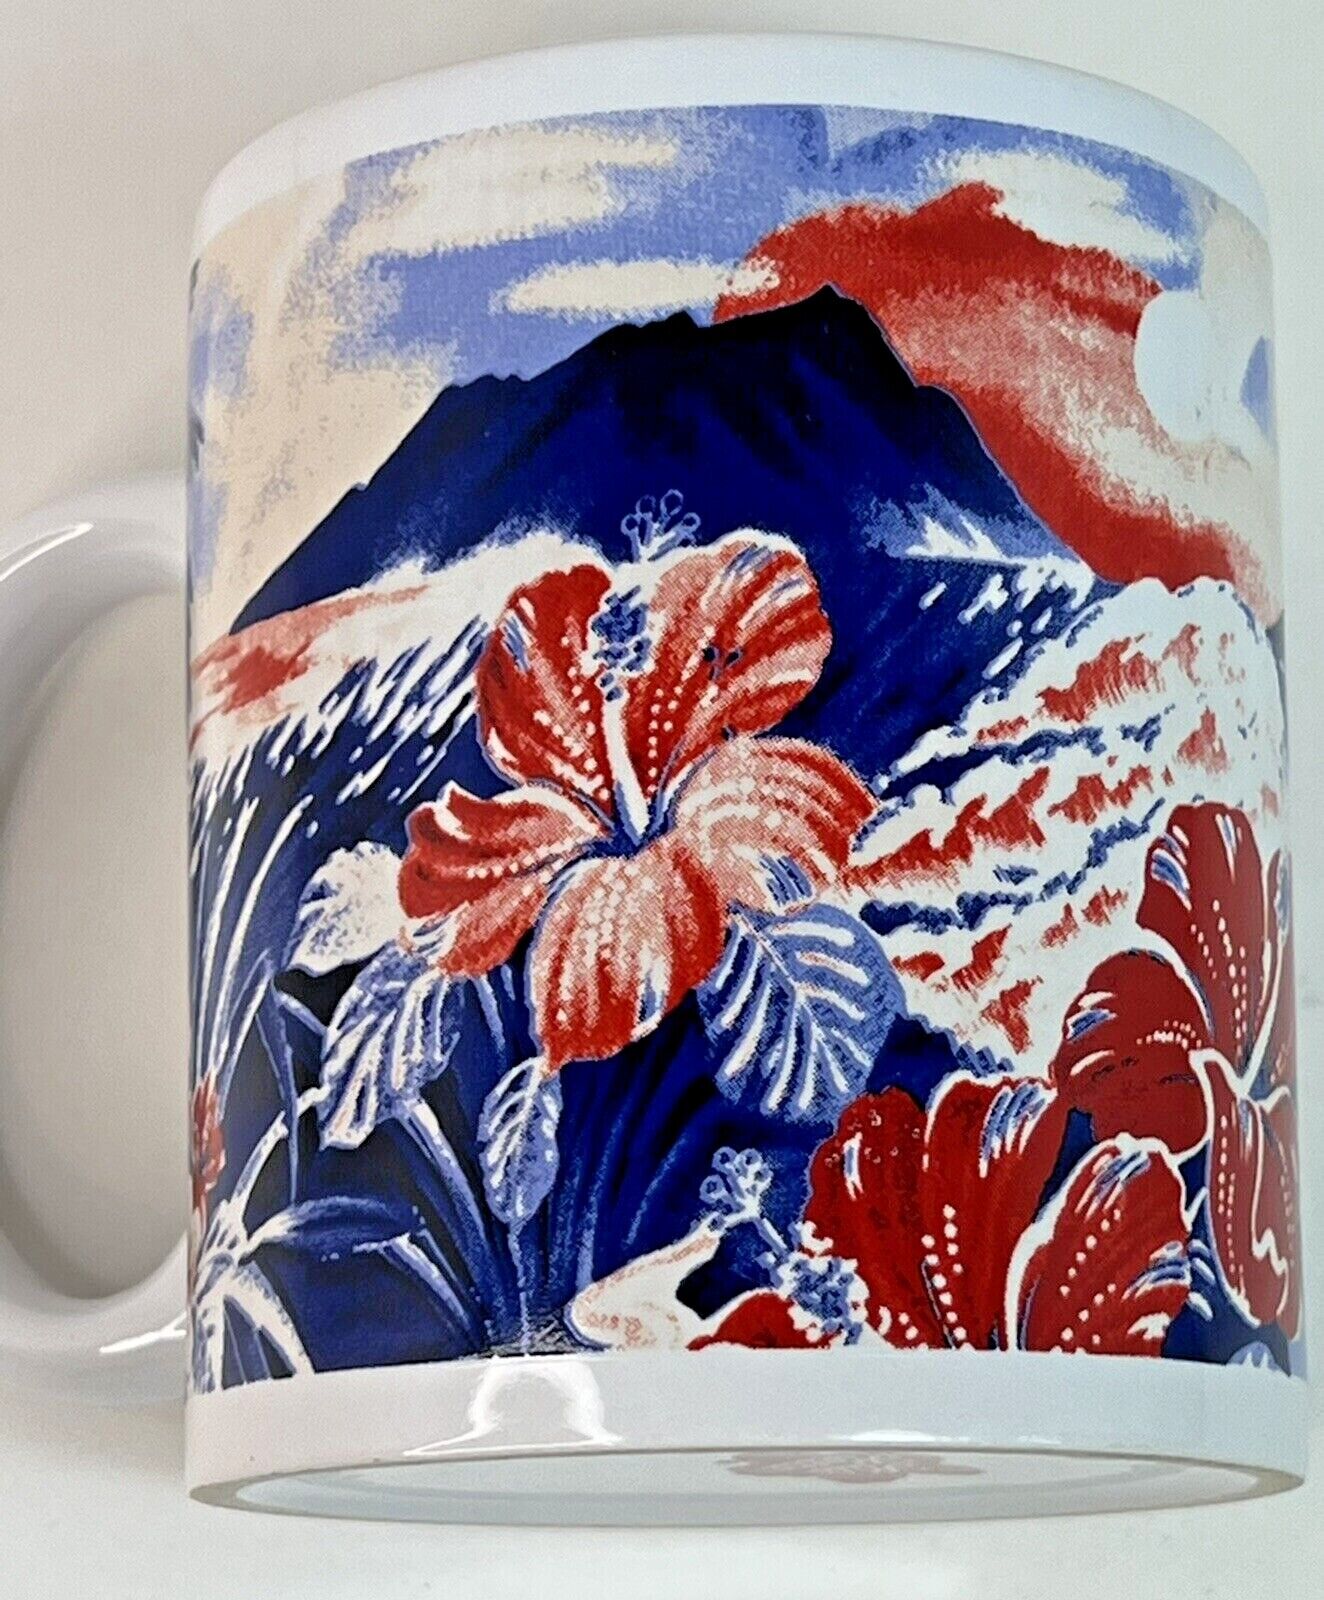 Hilo Hattie Coffee Mug 2014 Red Blue Hibiscus Hawaiian Flowers  Mountains Ocean 